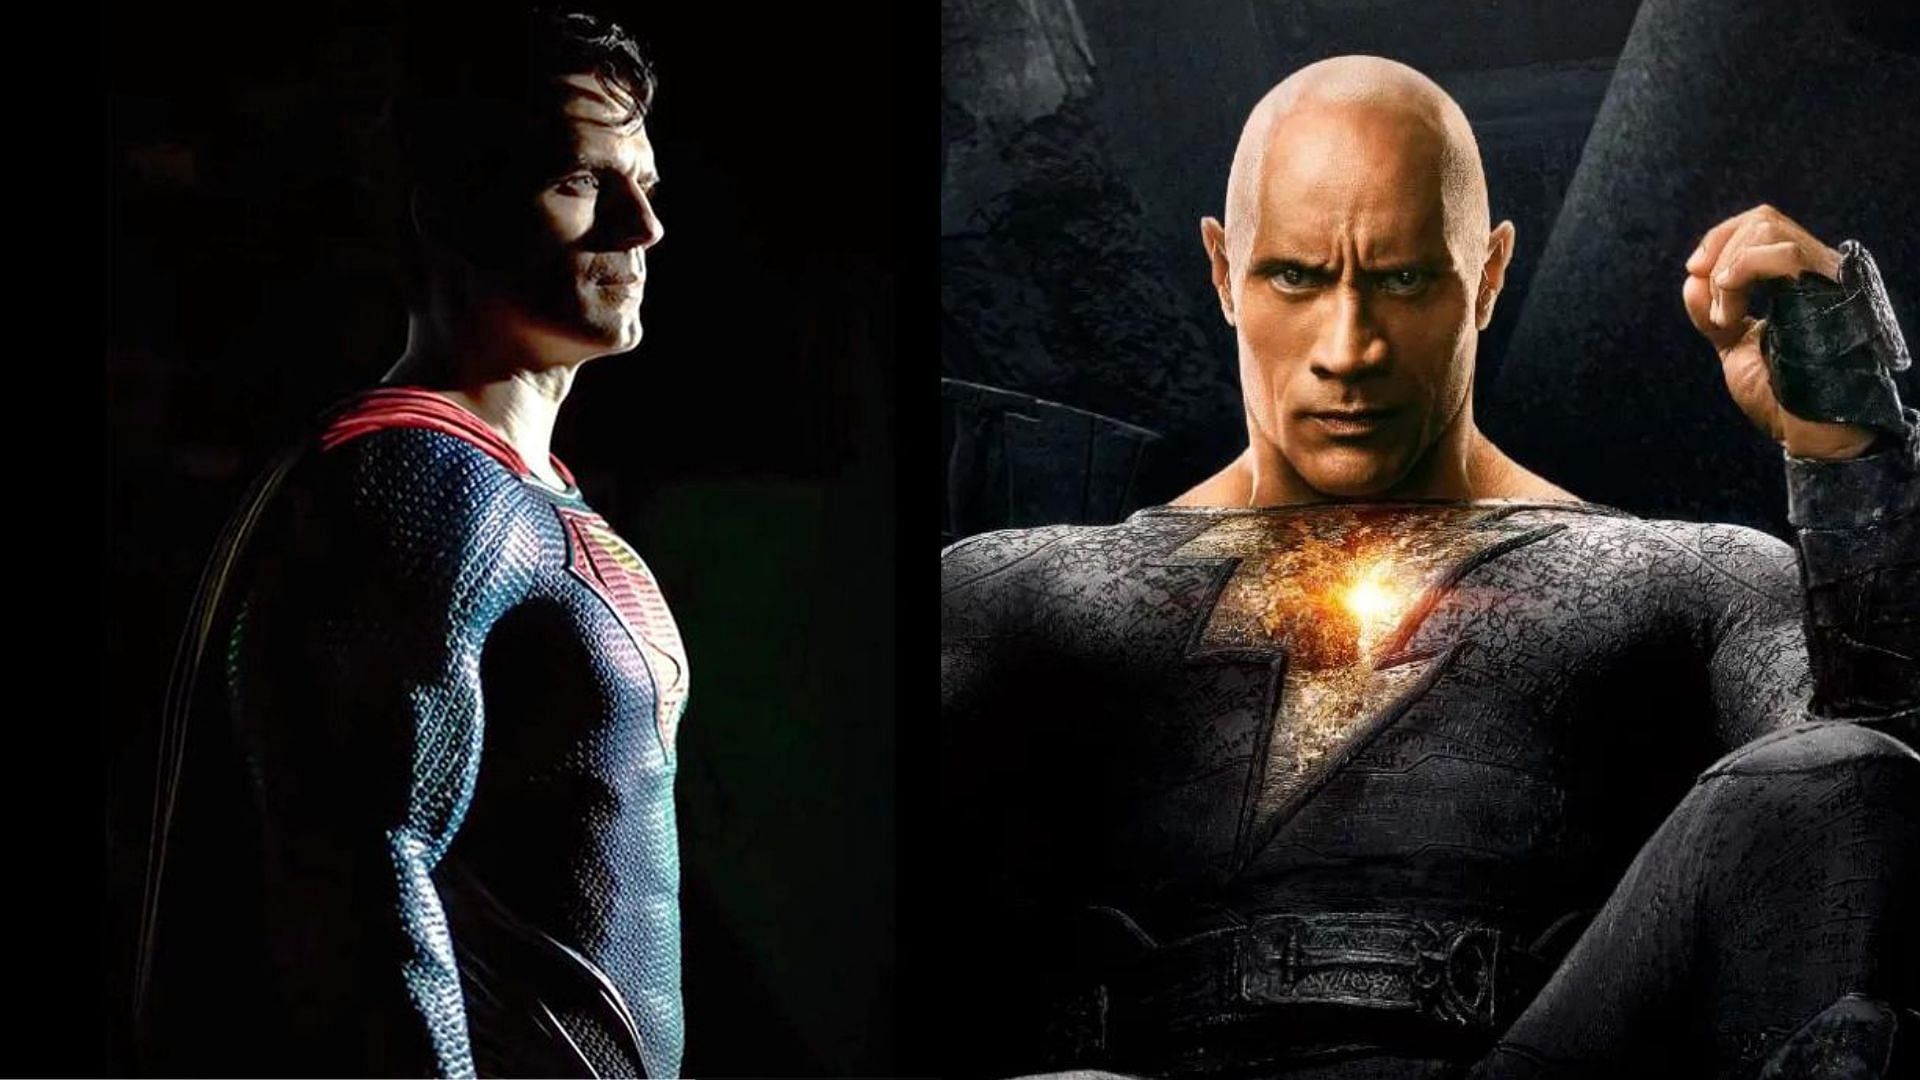 Henry Cavill as Superman and Dwayne Johnson as Black Adam